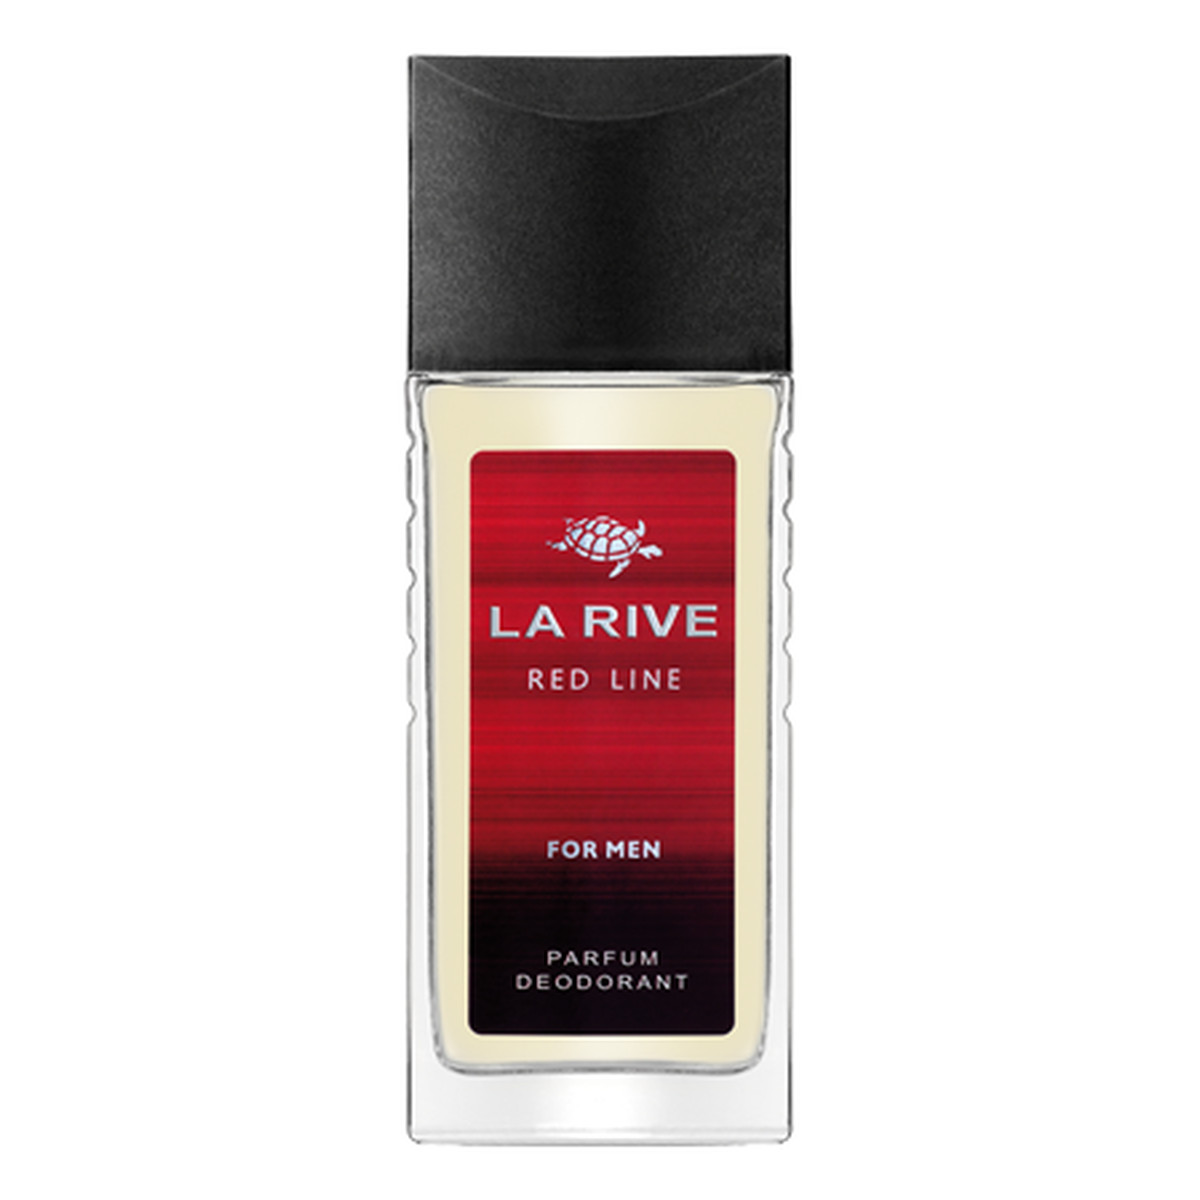 La Rive Red Line Men Dezodorant Perfumowany 80ml